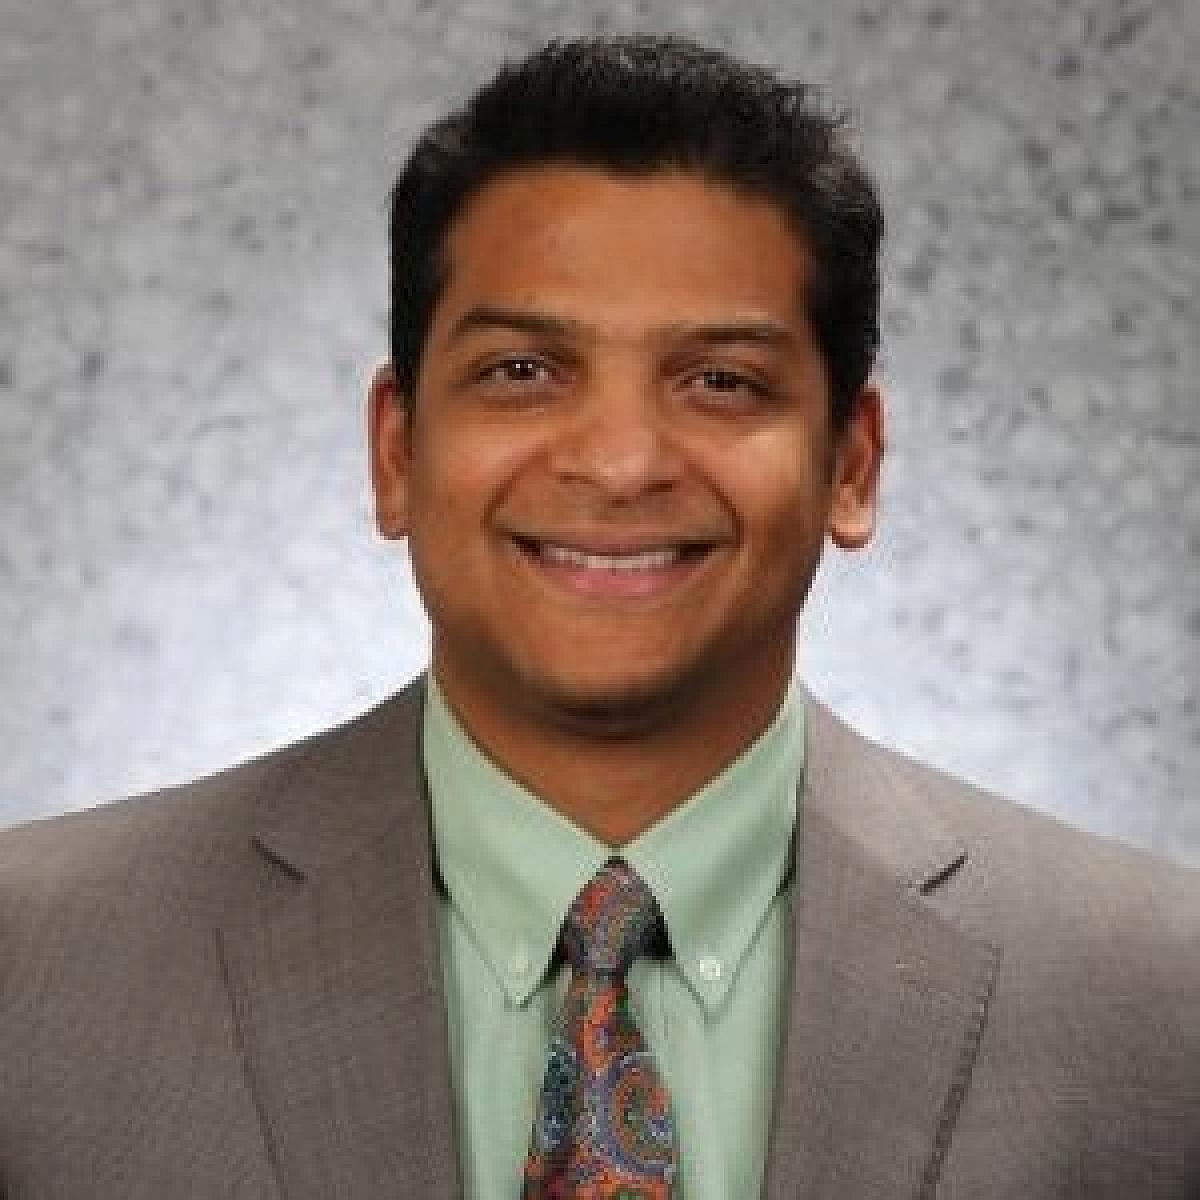 Dr. Venkata Kashyap Yellepeddi smiles in portrait photo with grey suit, green shirt, and orange tie